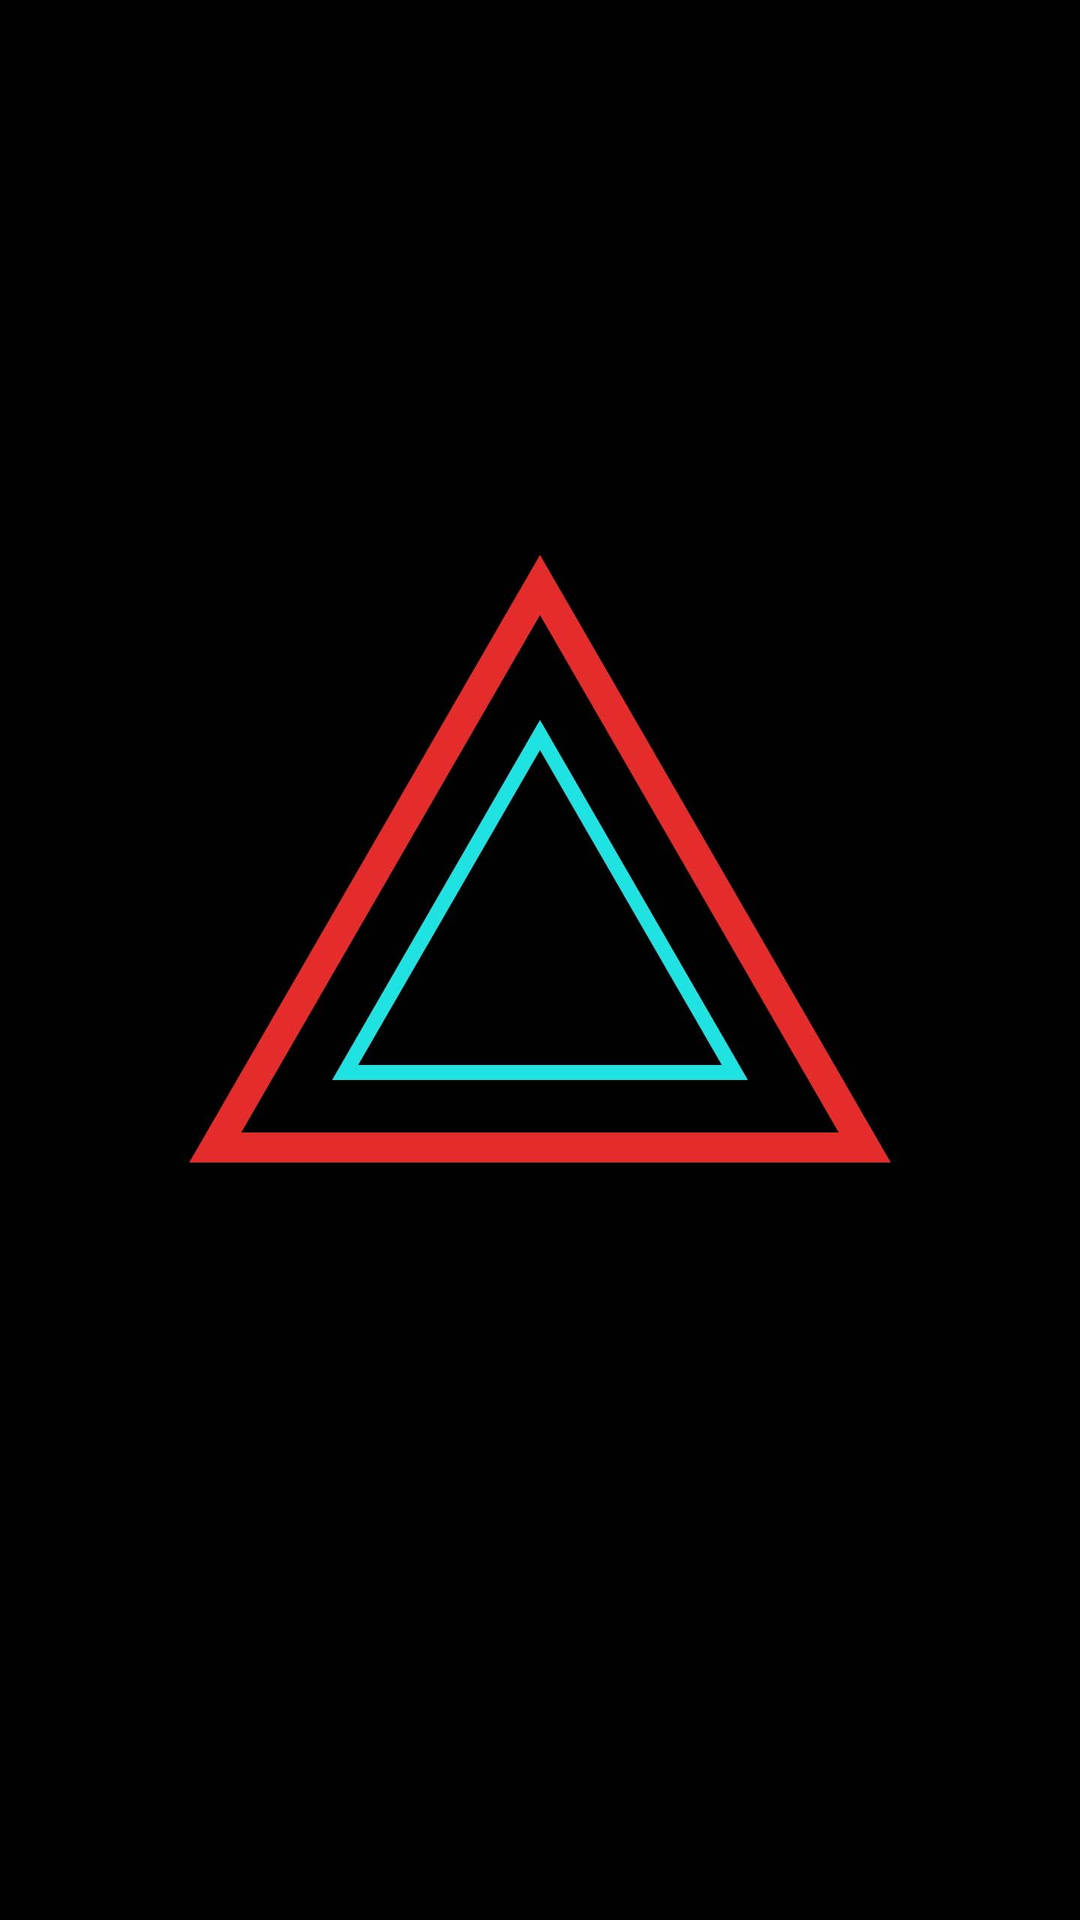 Black Pyramid Neon Red Blue Light